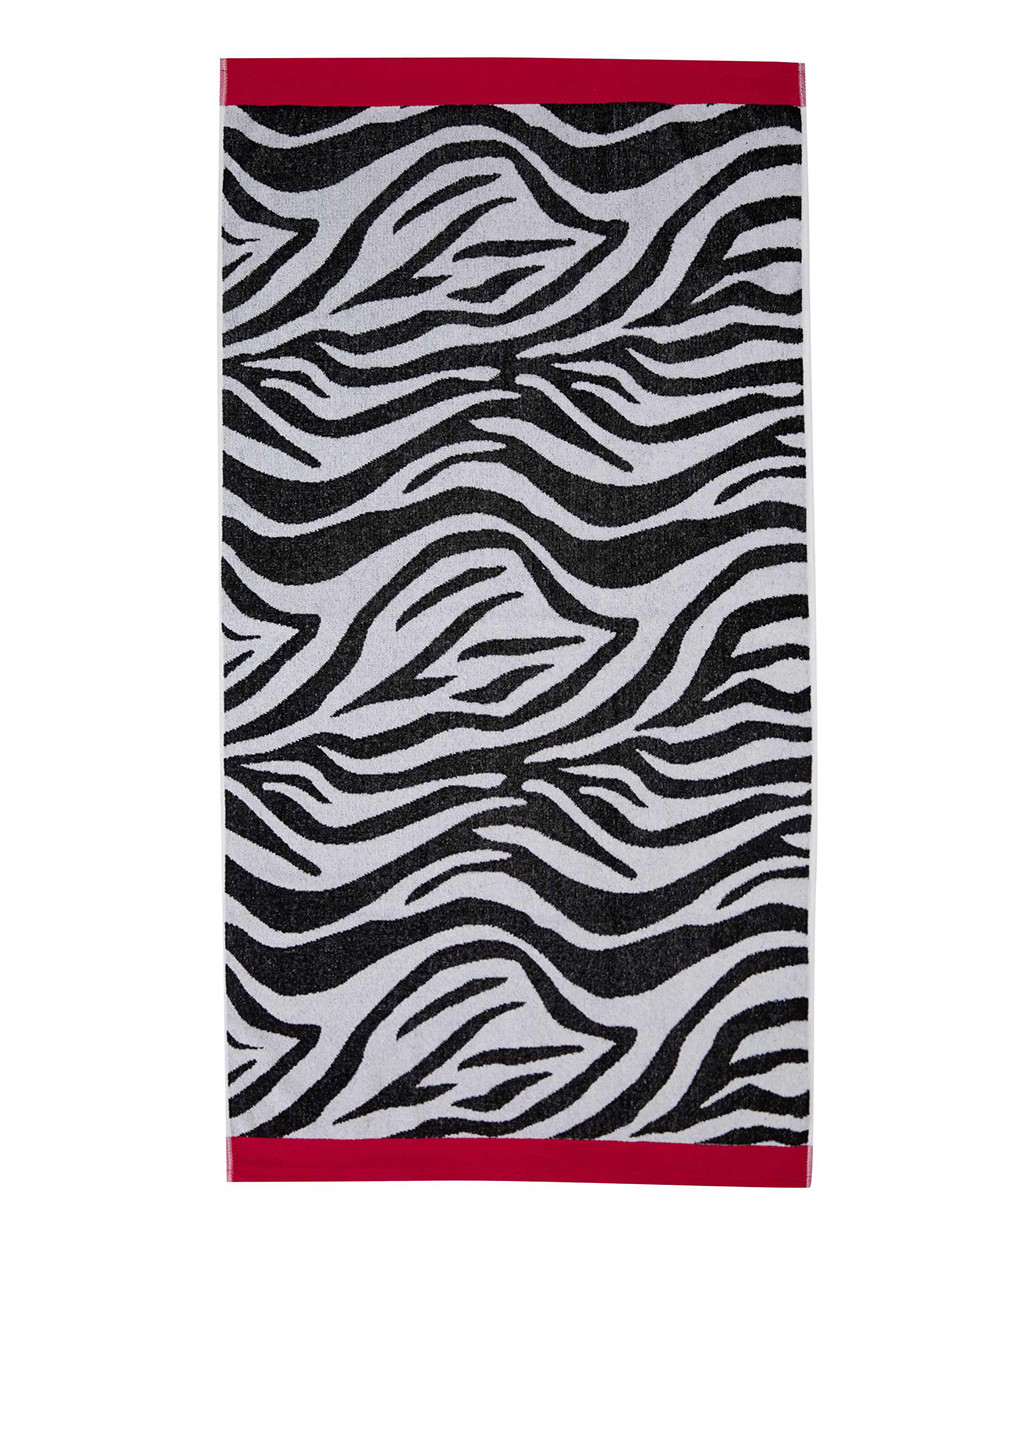 DeFacto полотенце, 75х150 см зебра черно-белый производство - Турция